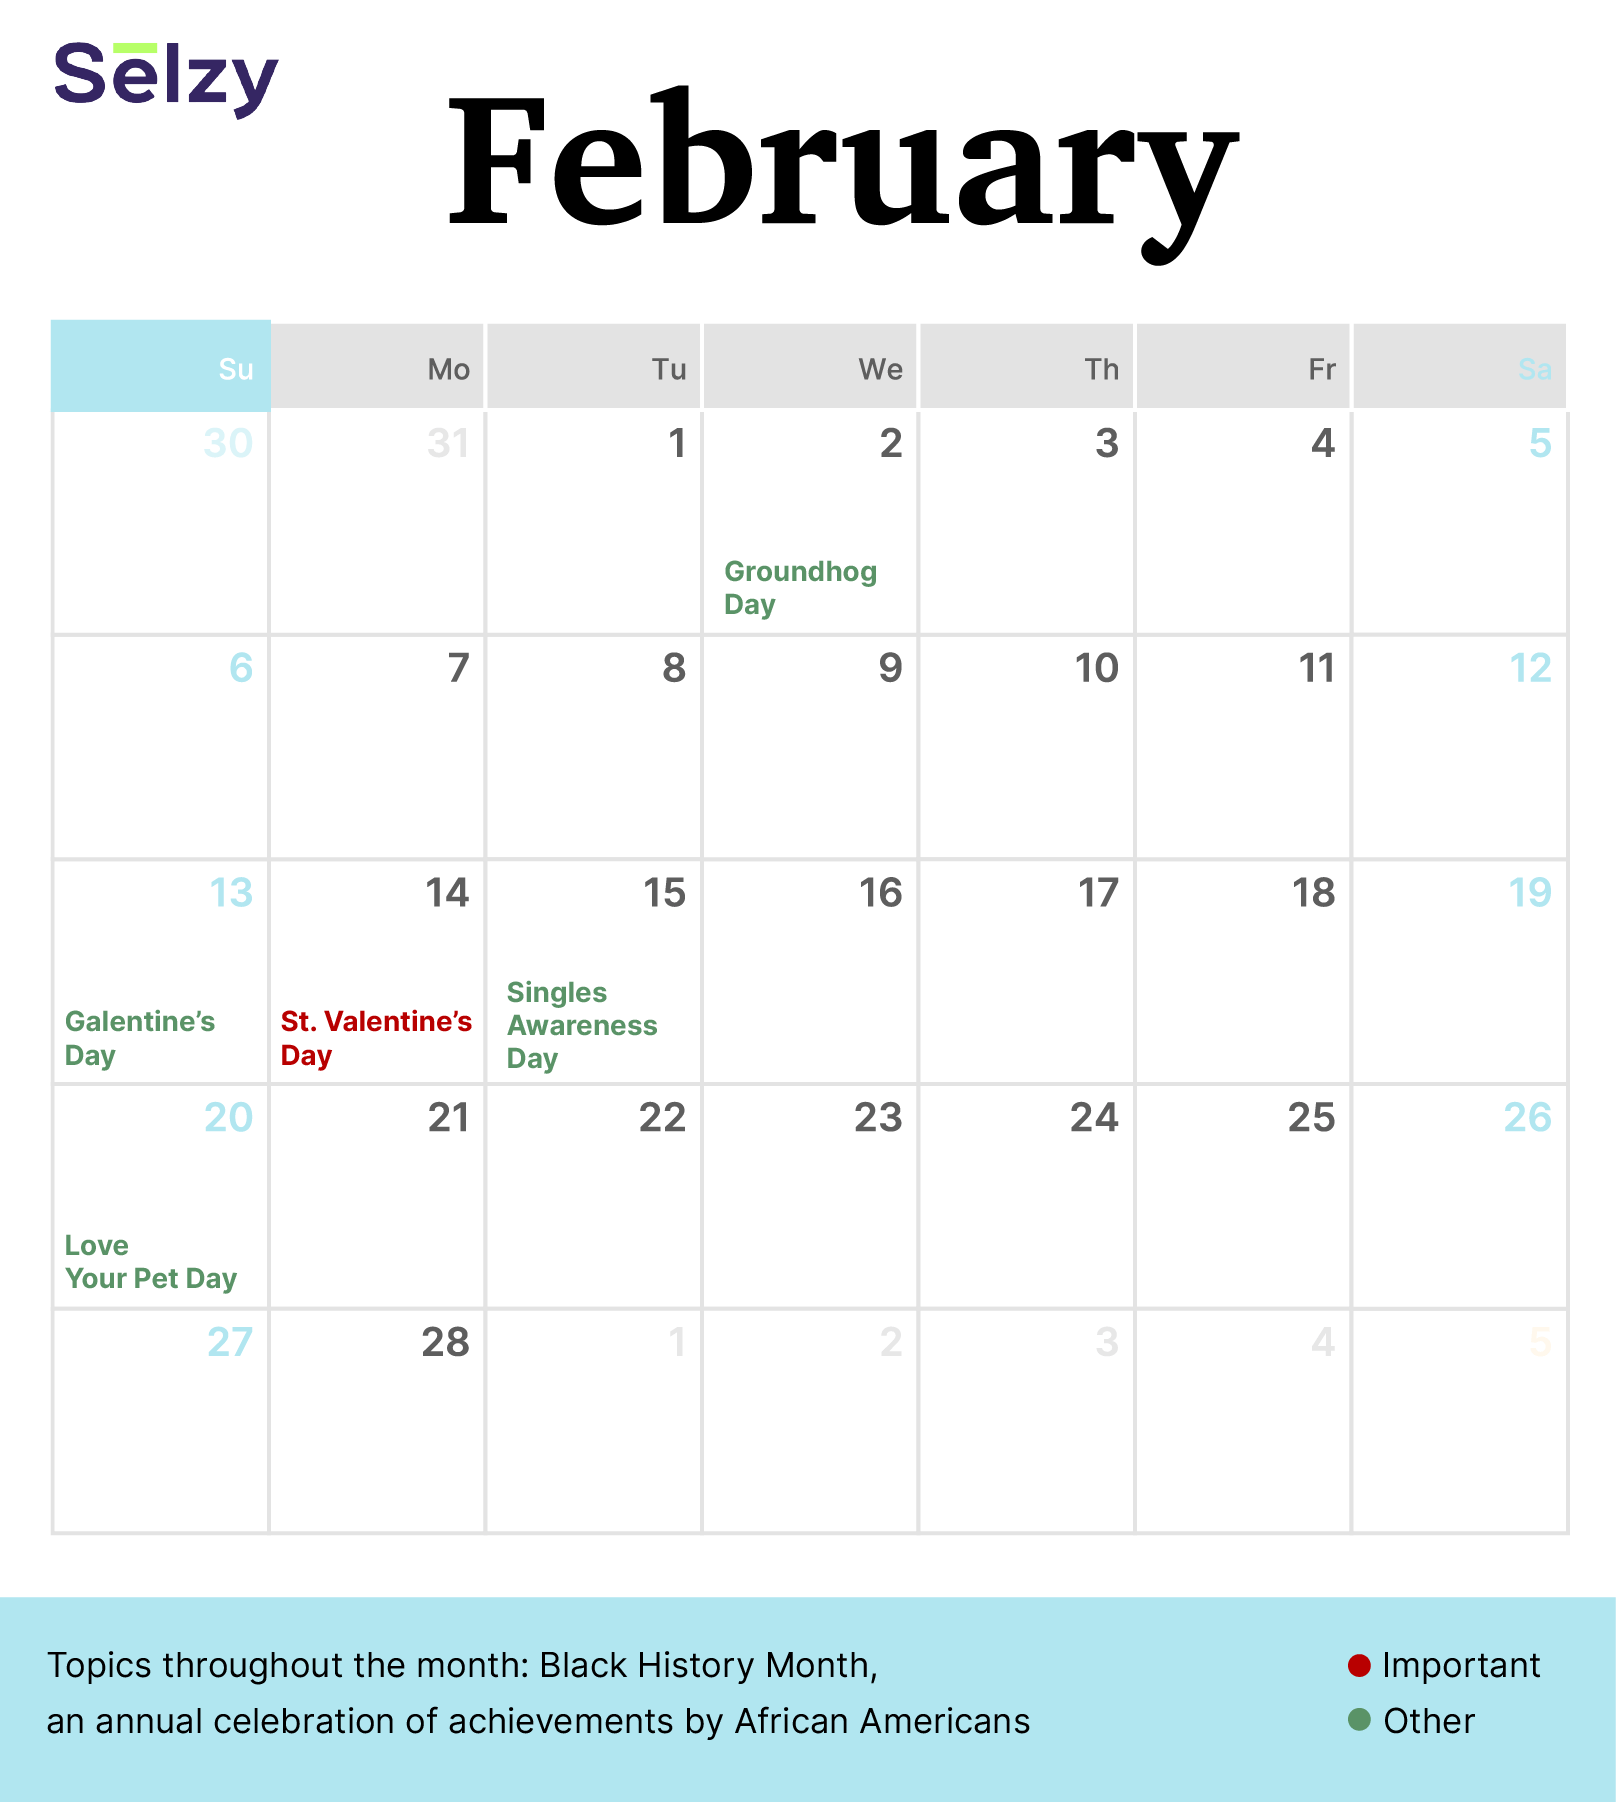 Holiday Marketing Calendar – February